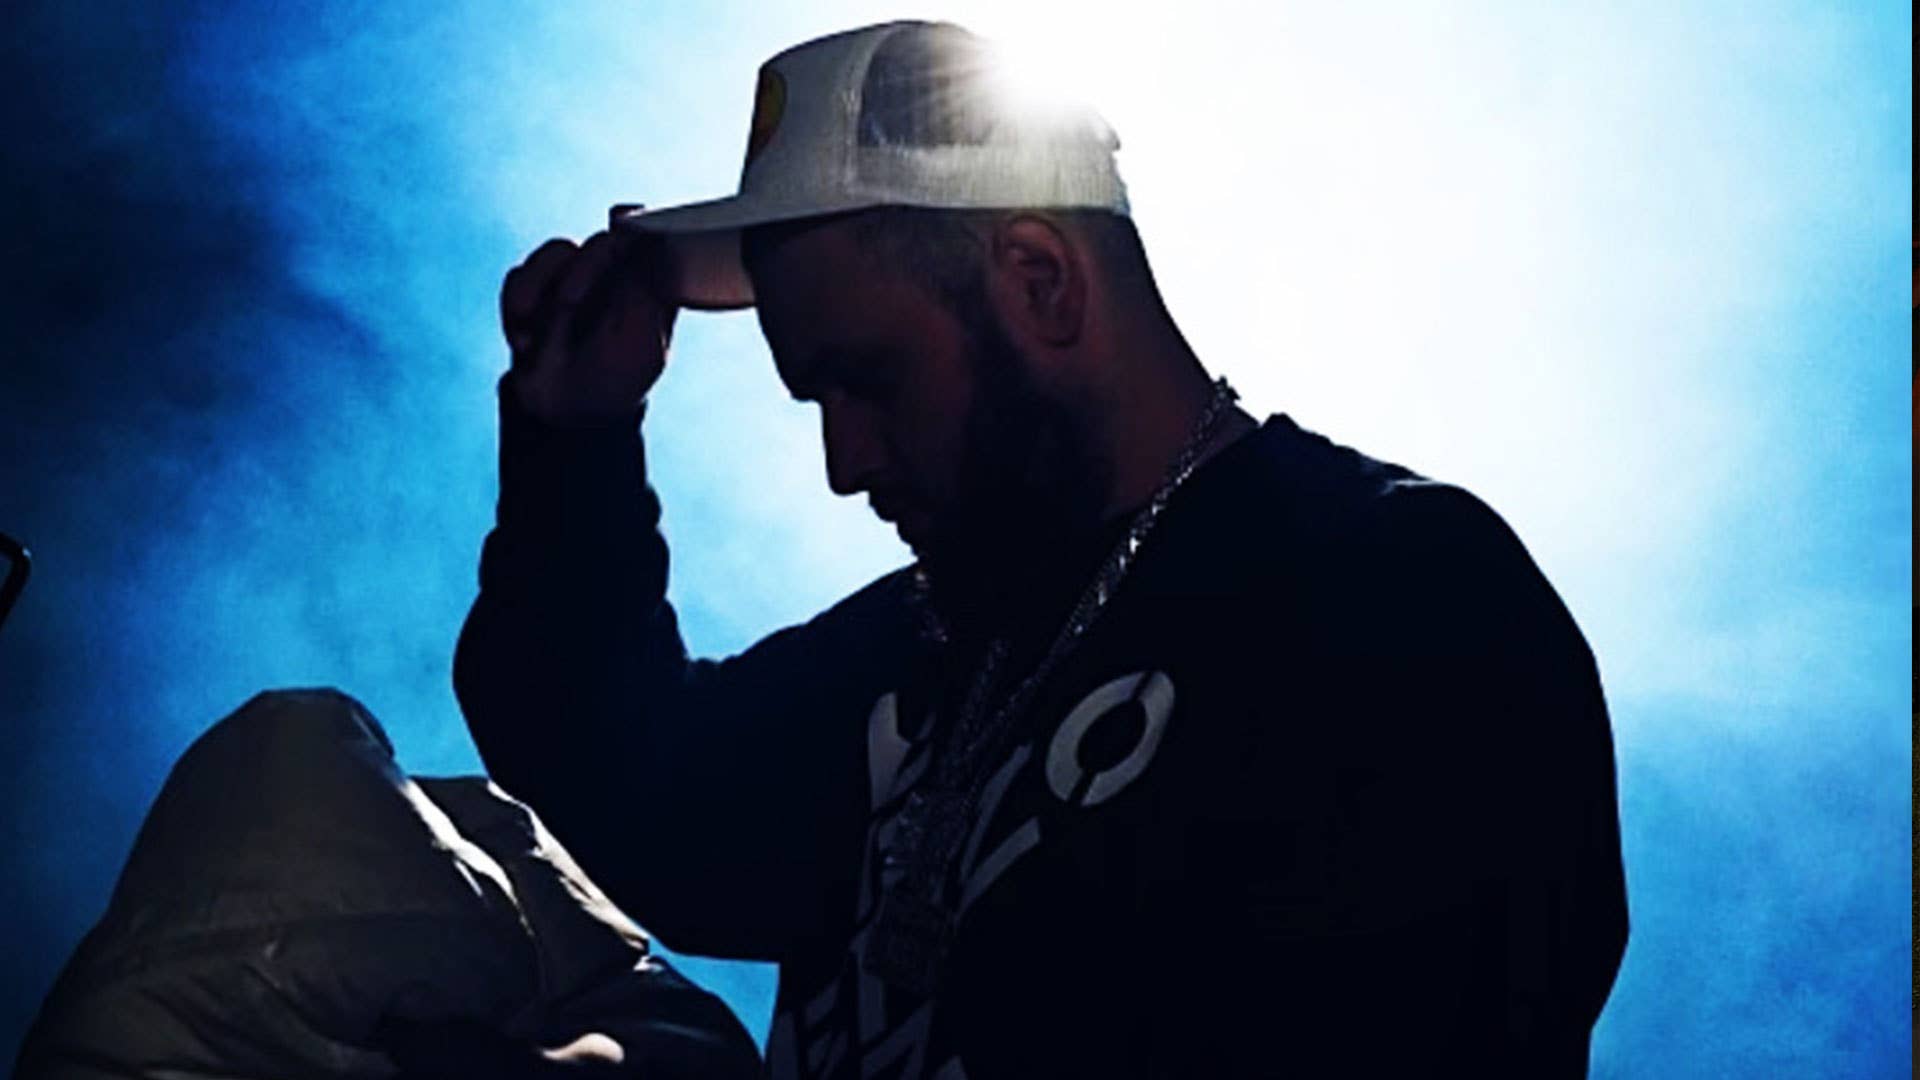 Toronto rapper Road Runner drops new single "Trapistan"